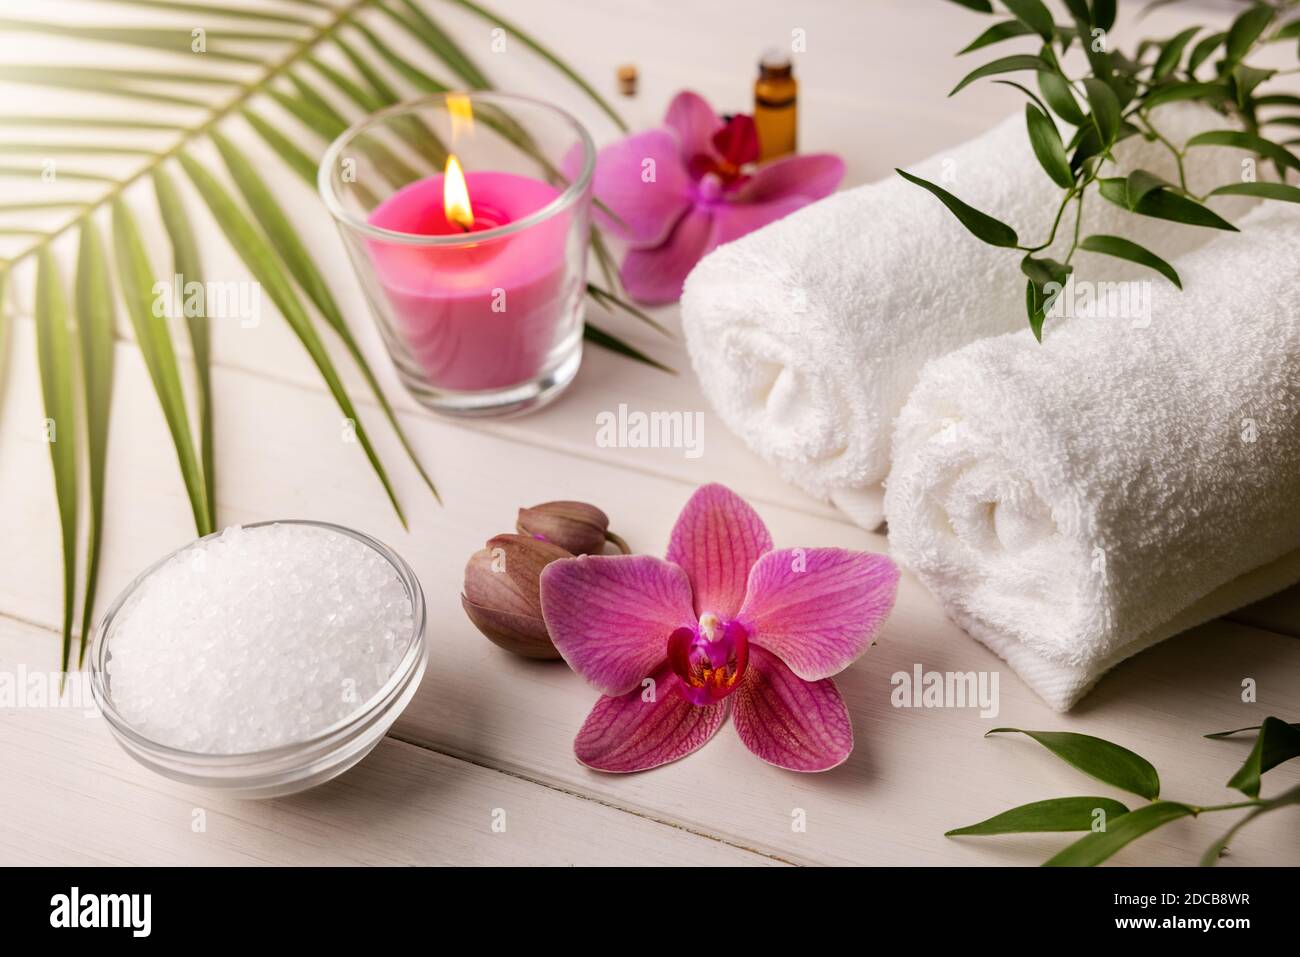 spa salt treatment. spa items on white wooden table Stock Photo